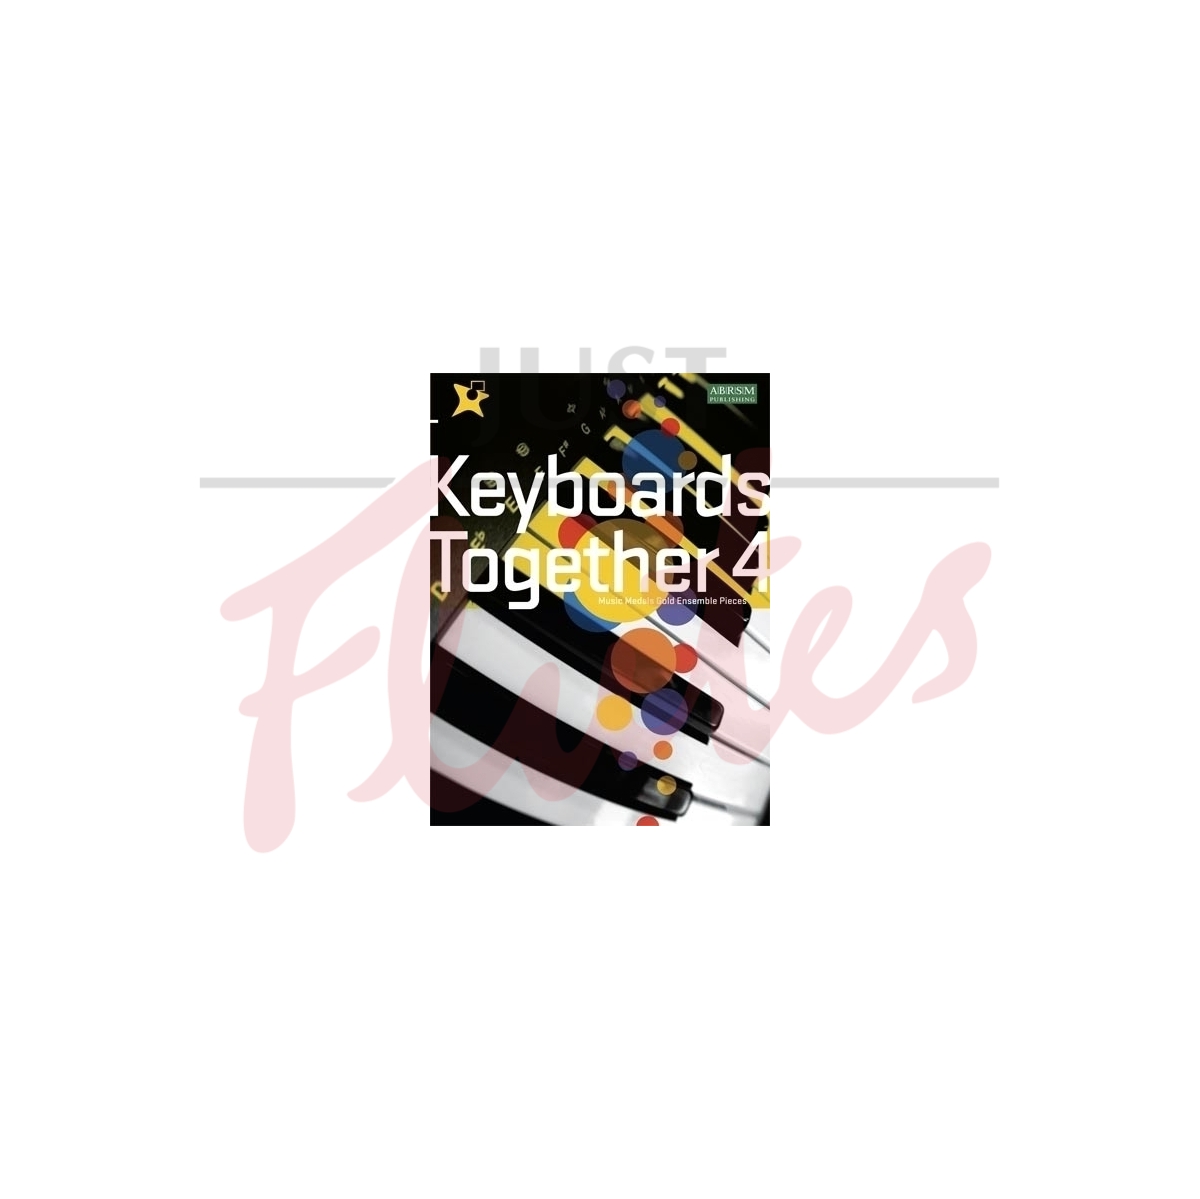 Keyboards Together 4: Music Medals Gold